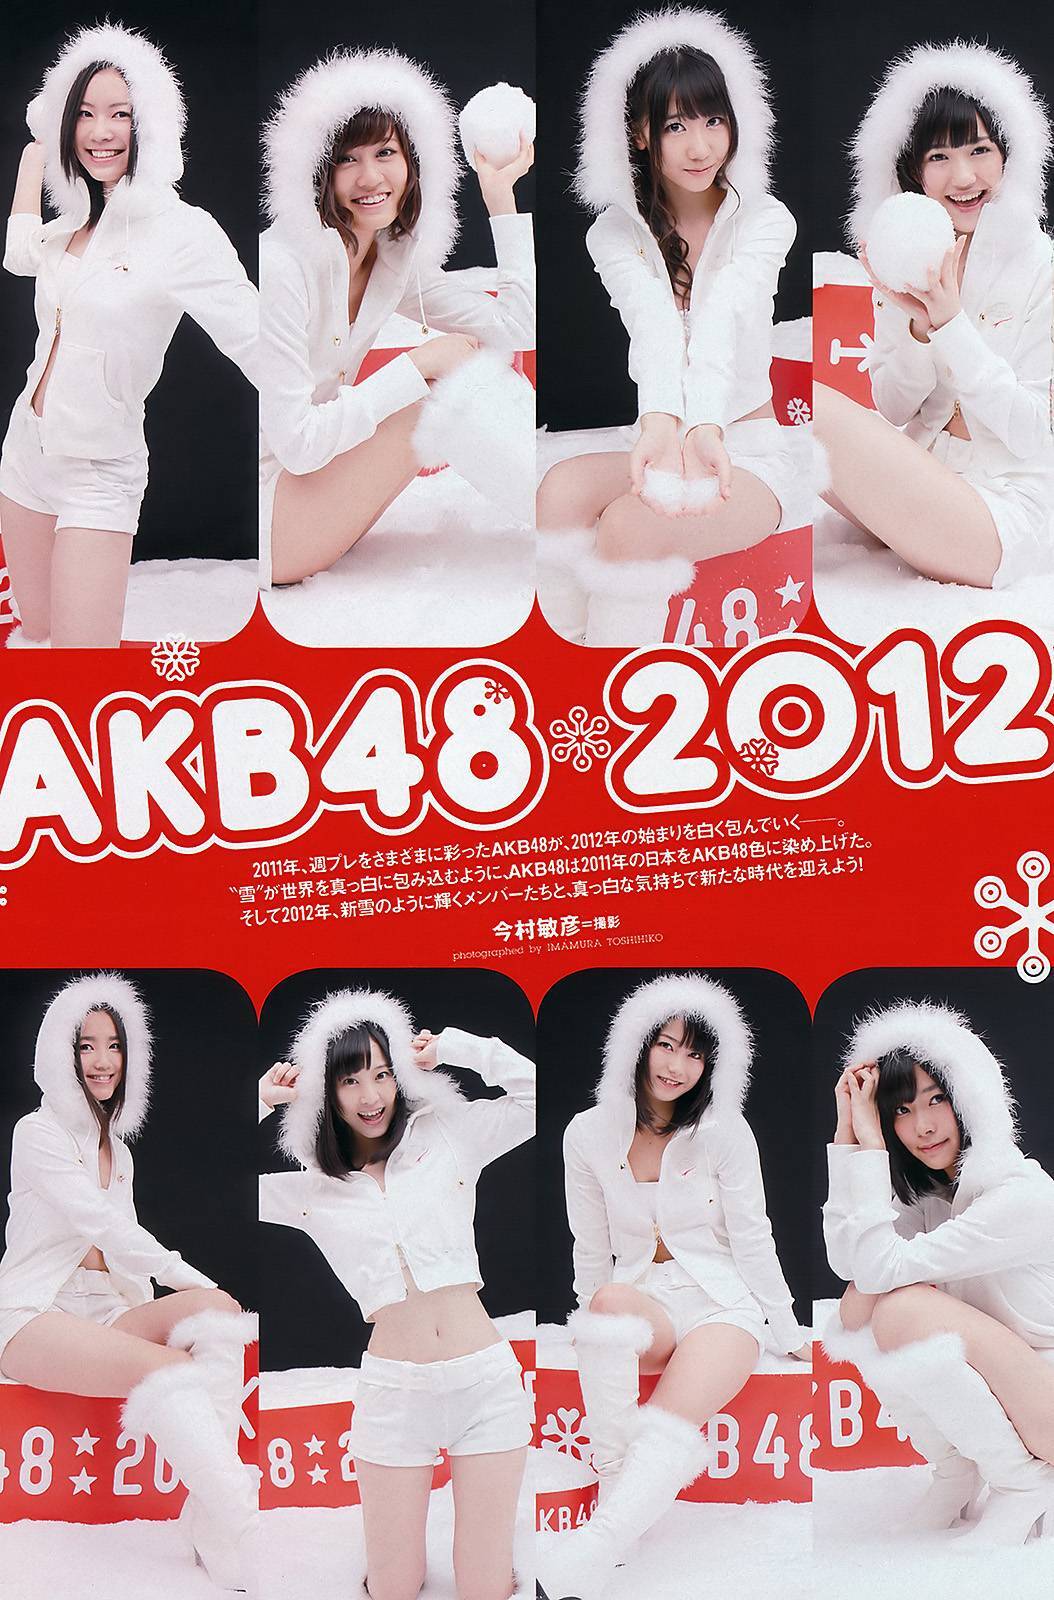 AKB48 - BBS